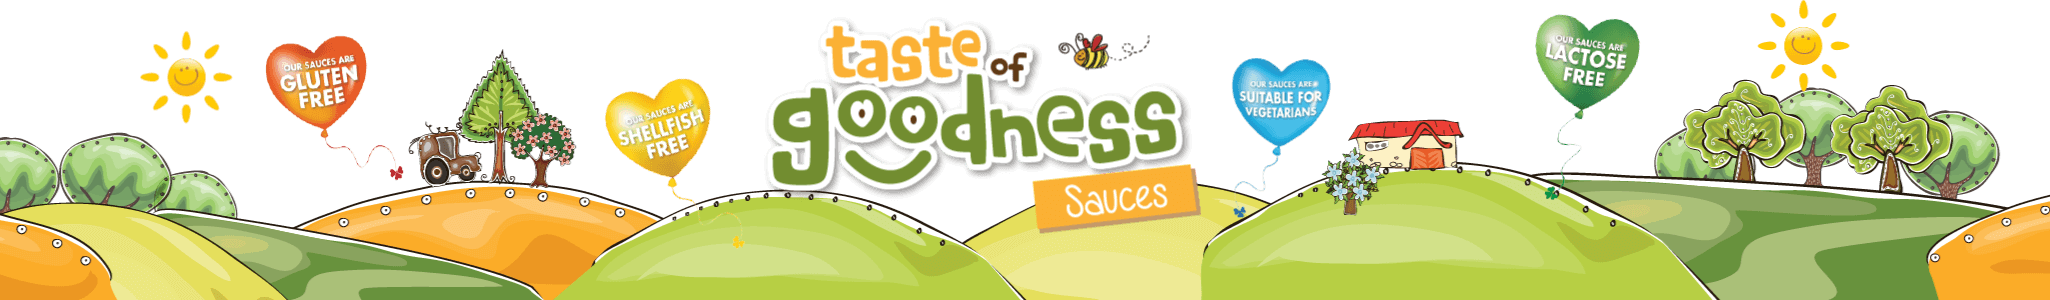 Taste of Goodness sauces website